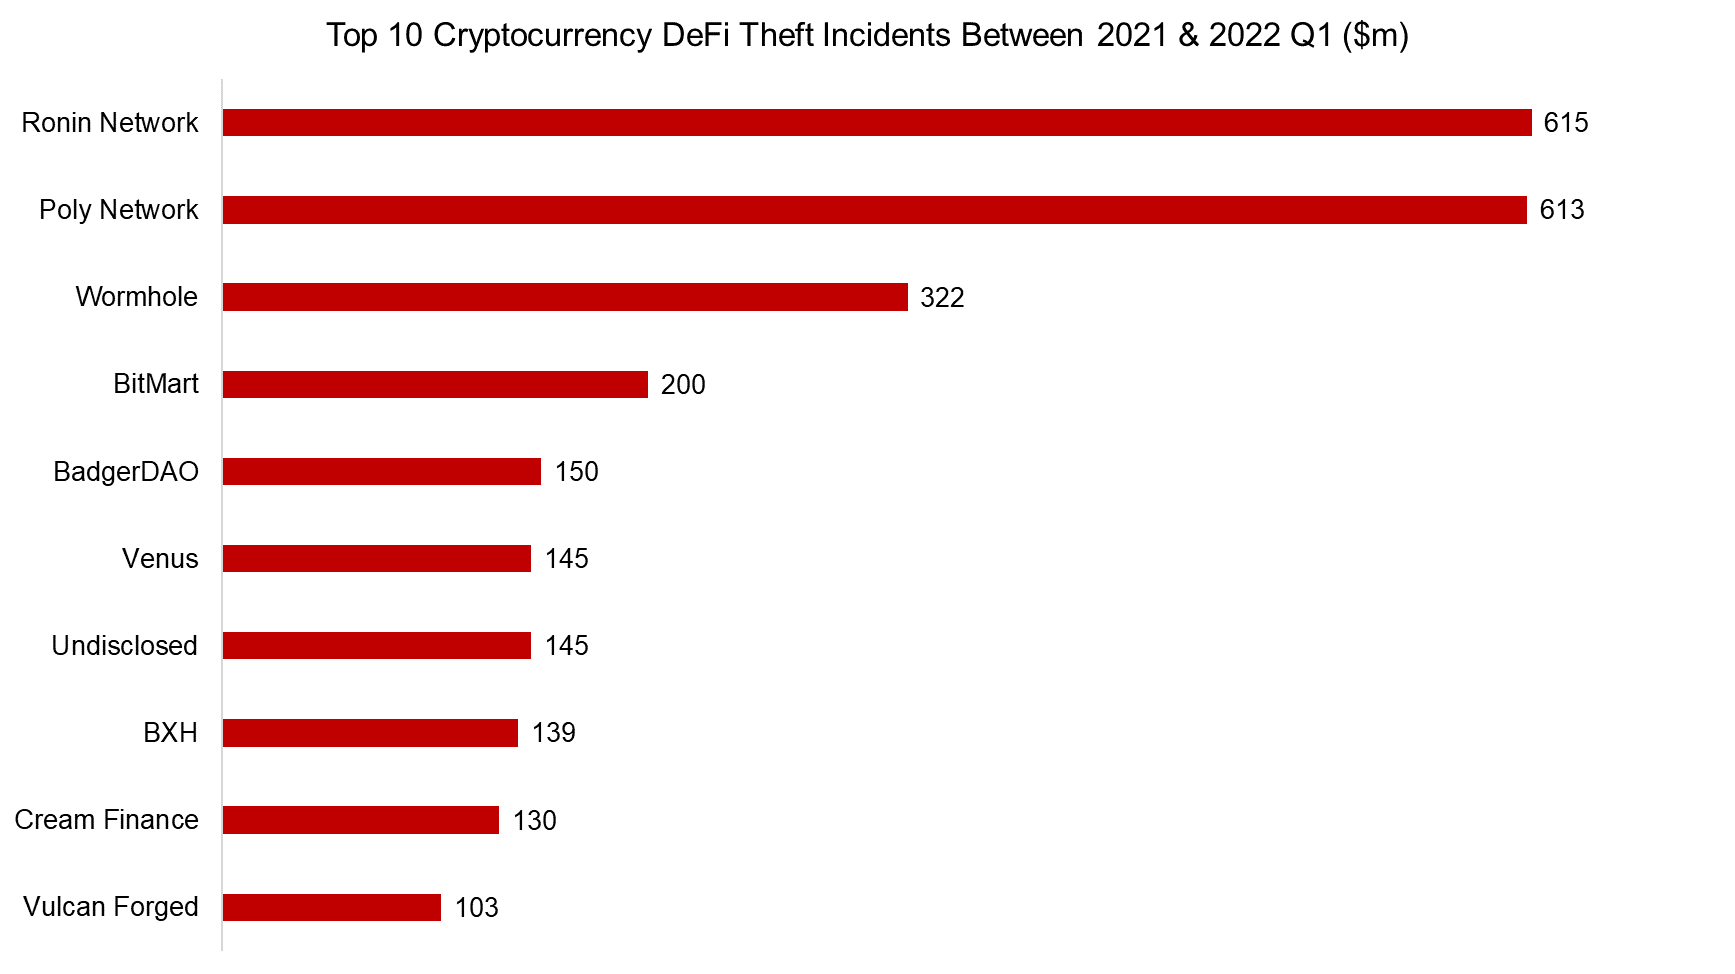 Top 10 Cryptocurrency DeFi Theft Incidents Between 2021 & 2022 Q1 ($m)